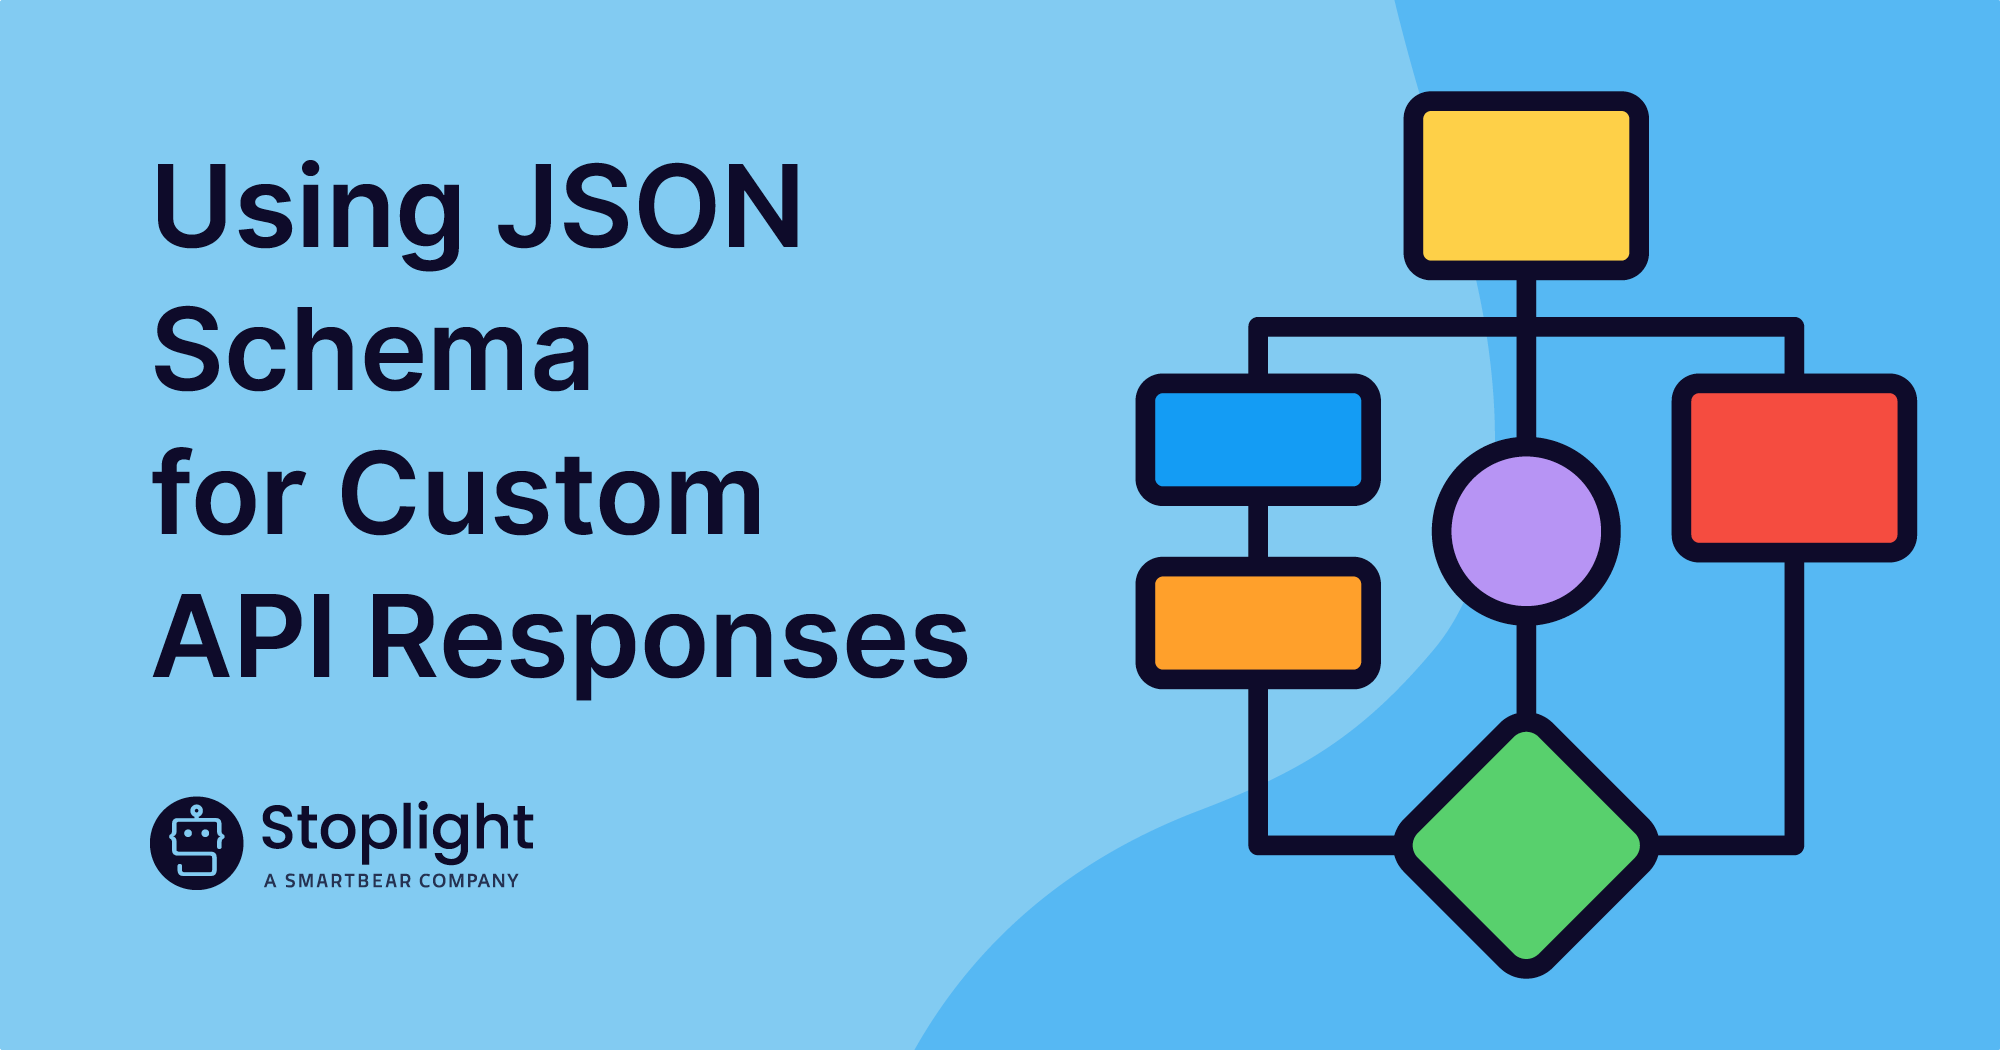 Using JSON Schema for Custom API Responses